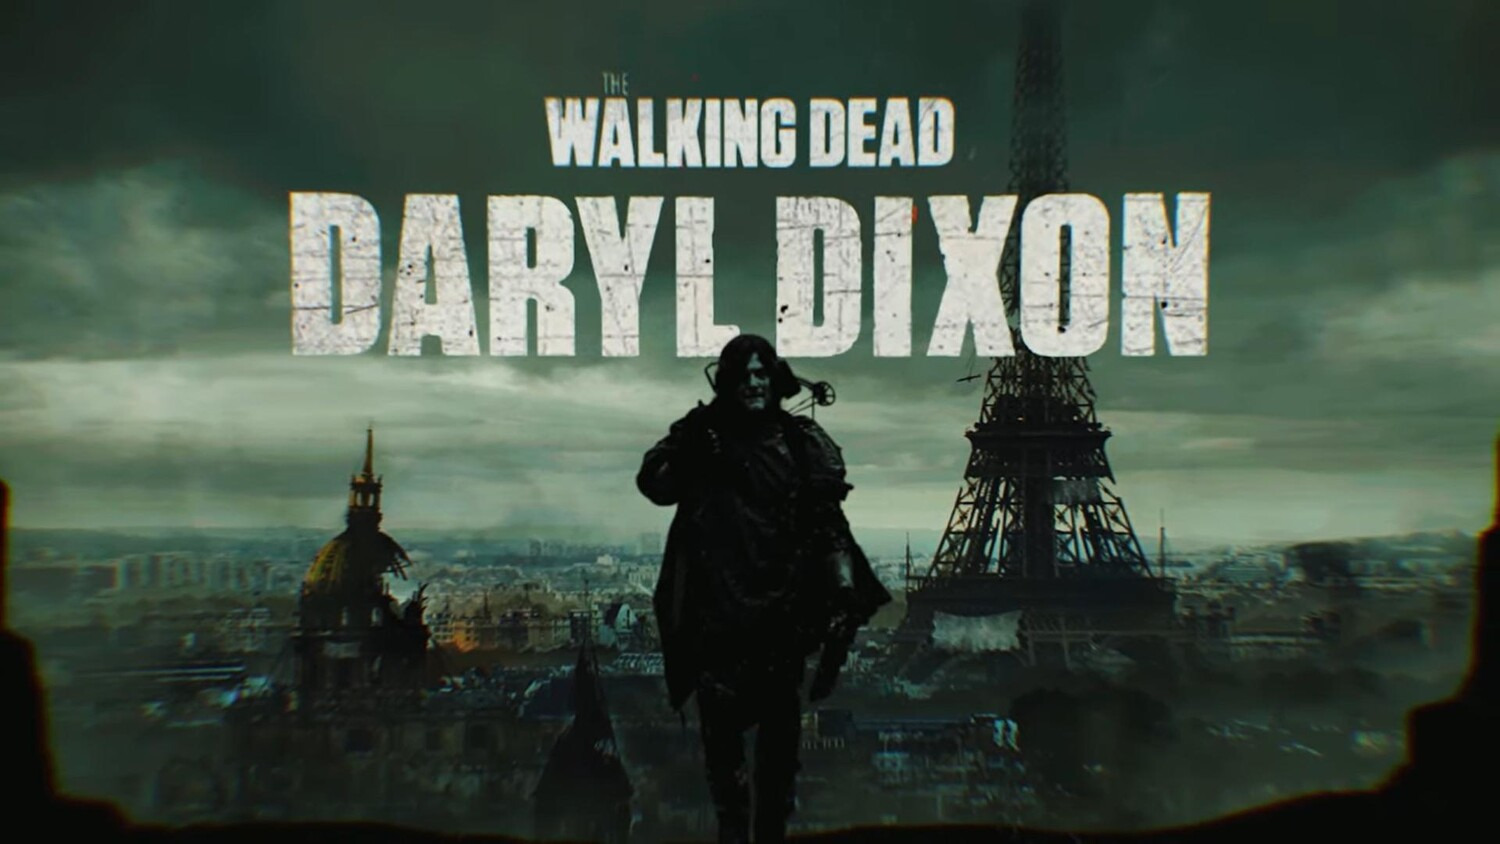 Show The Walking Dead: Daryl Dixon